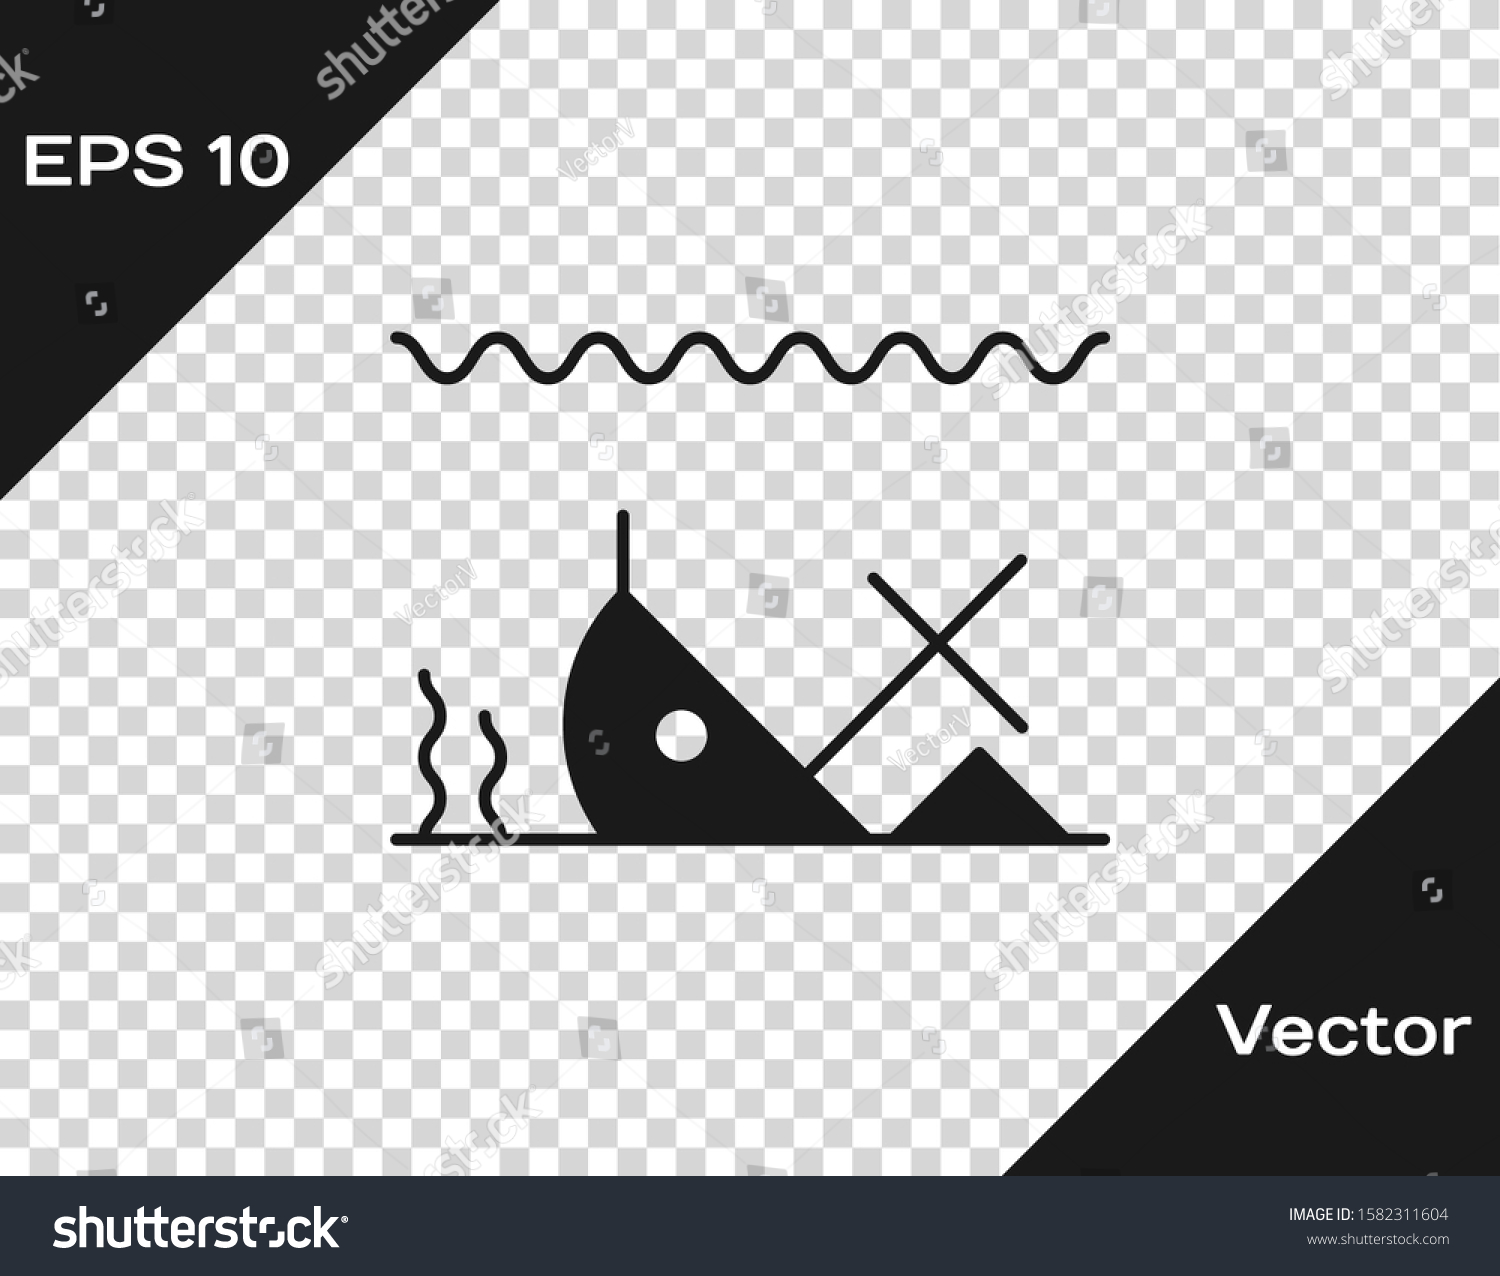 grey sunken ship bottom sea icon stock vector royalty free 1582311604 shutterstock